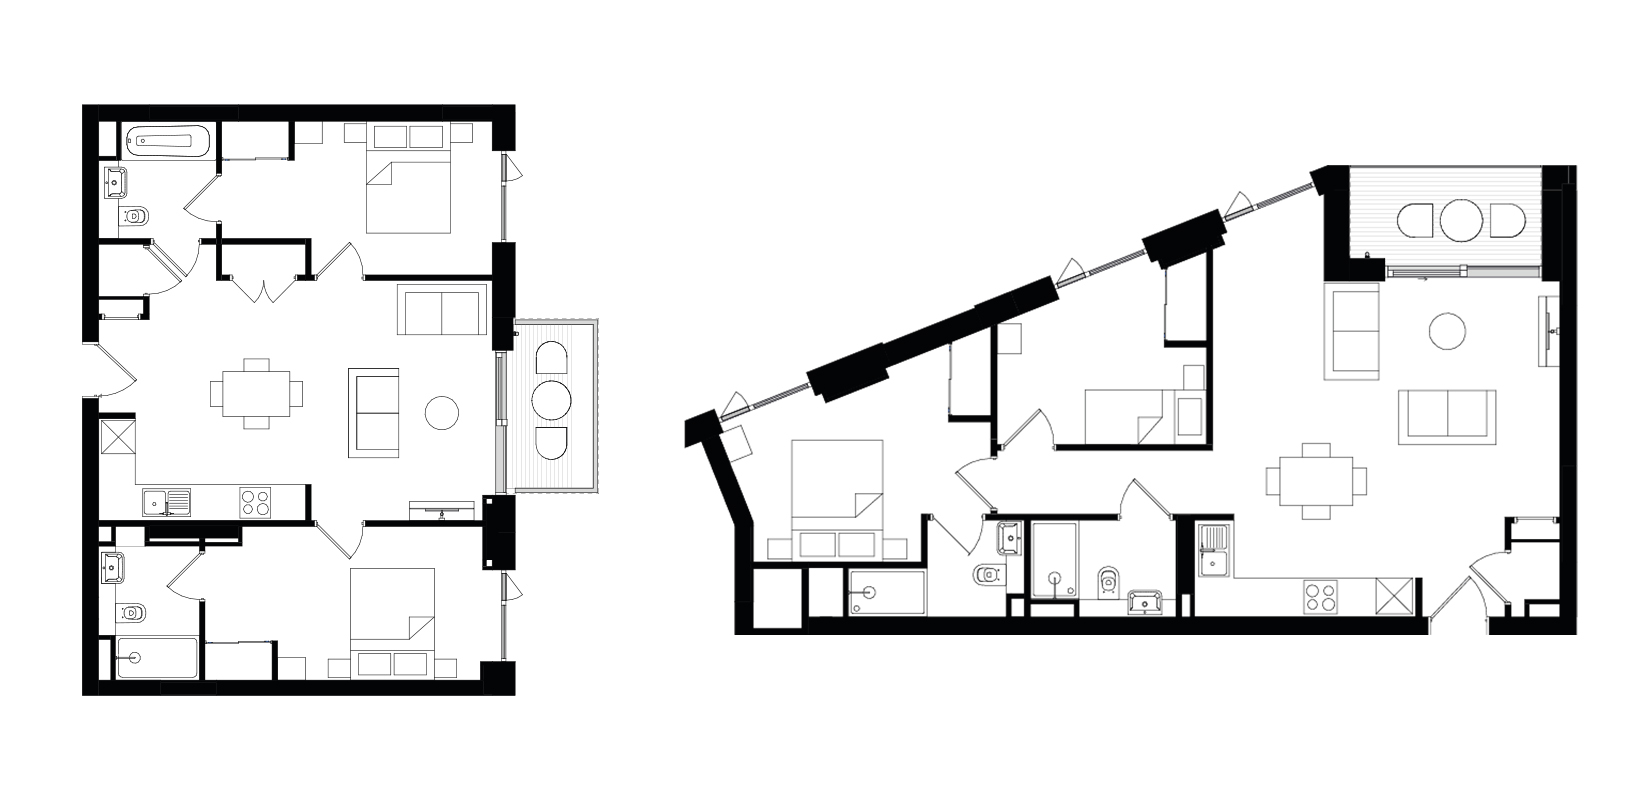 A 2 bedroom apartment floorplan